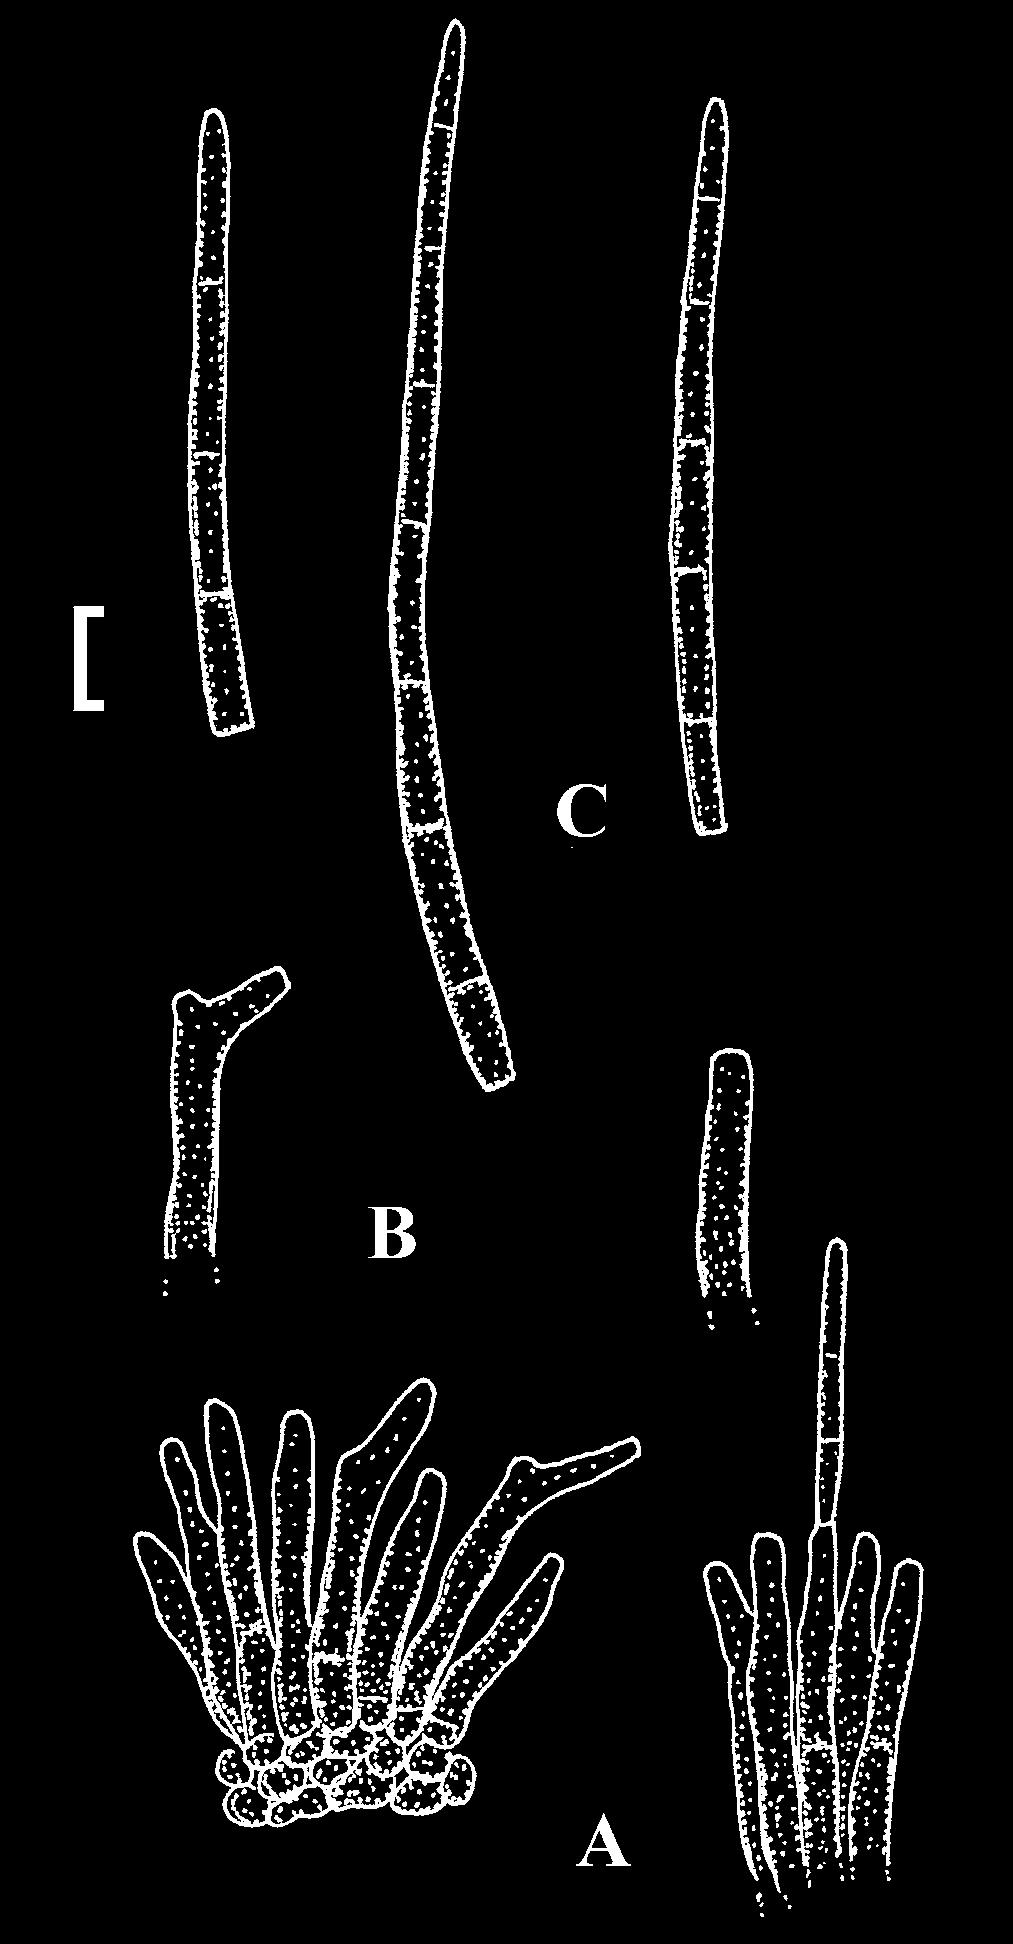 Braun et al. a b c Fig. 33. Pseudocercospora cyatheae (NBRC-H-12398). a. drawing (A. Conidiophore fascicle, B. Conidia, U. Braun del.). b. Conidium (light microscopy). c. Conidiophore fascicle (light microscopy).